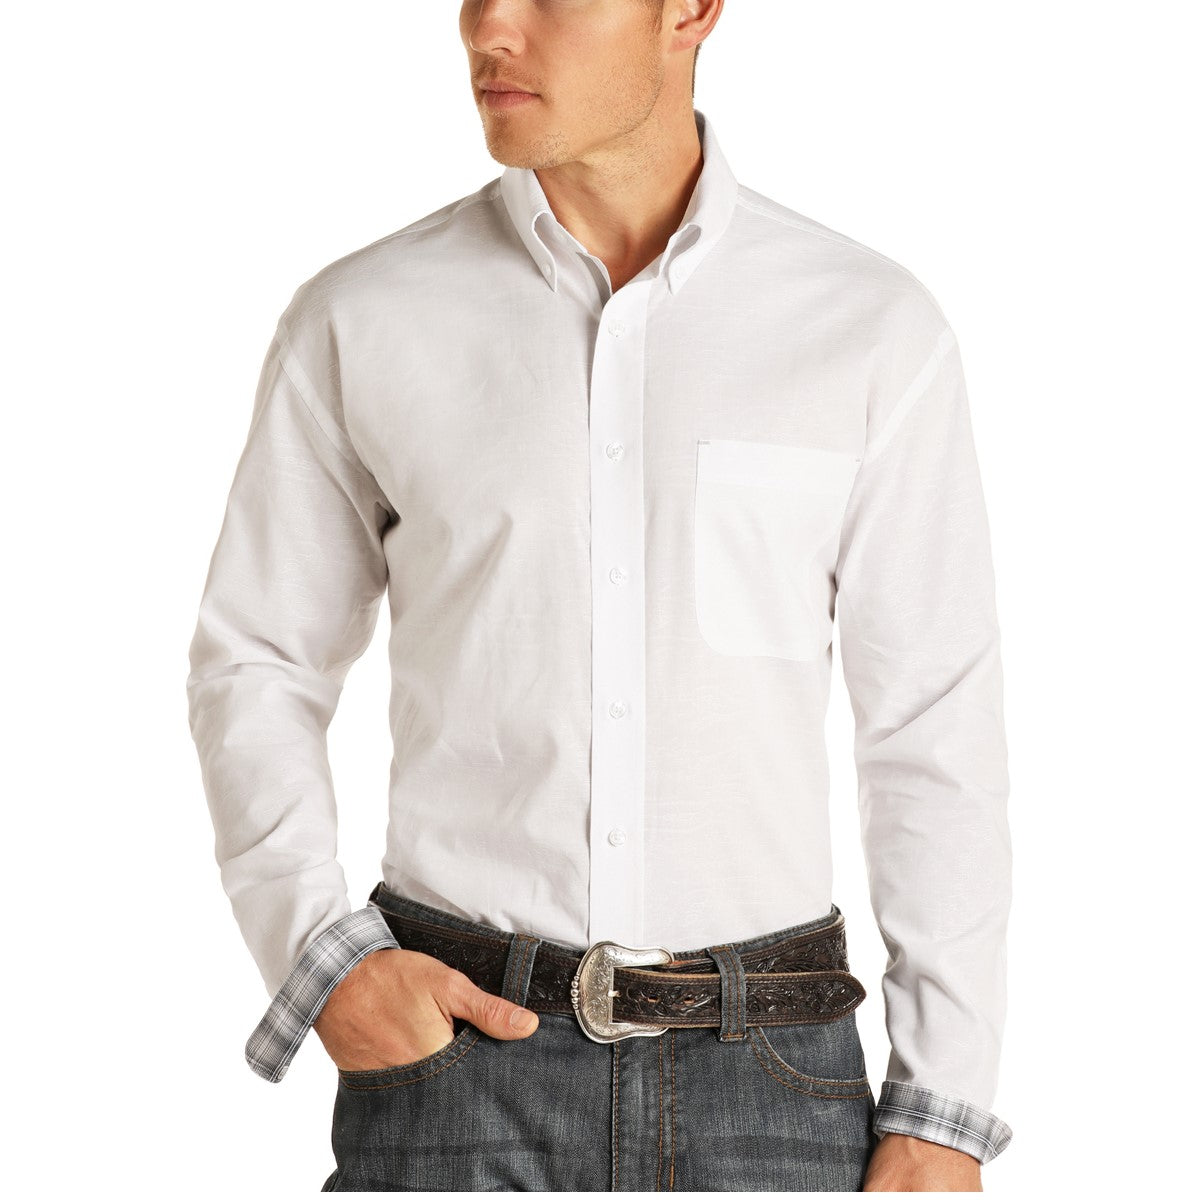 Panhandle Rough Stock Men's White Jacquard Button Shirt R0D1254